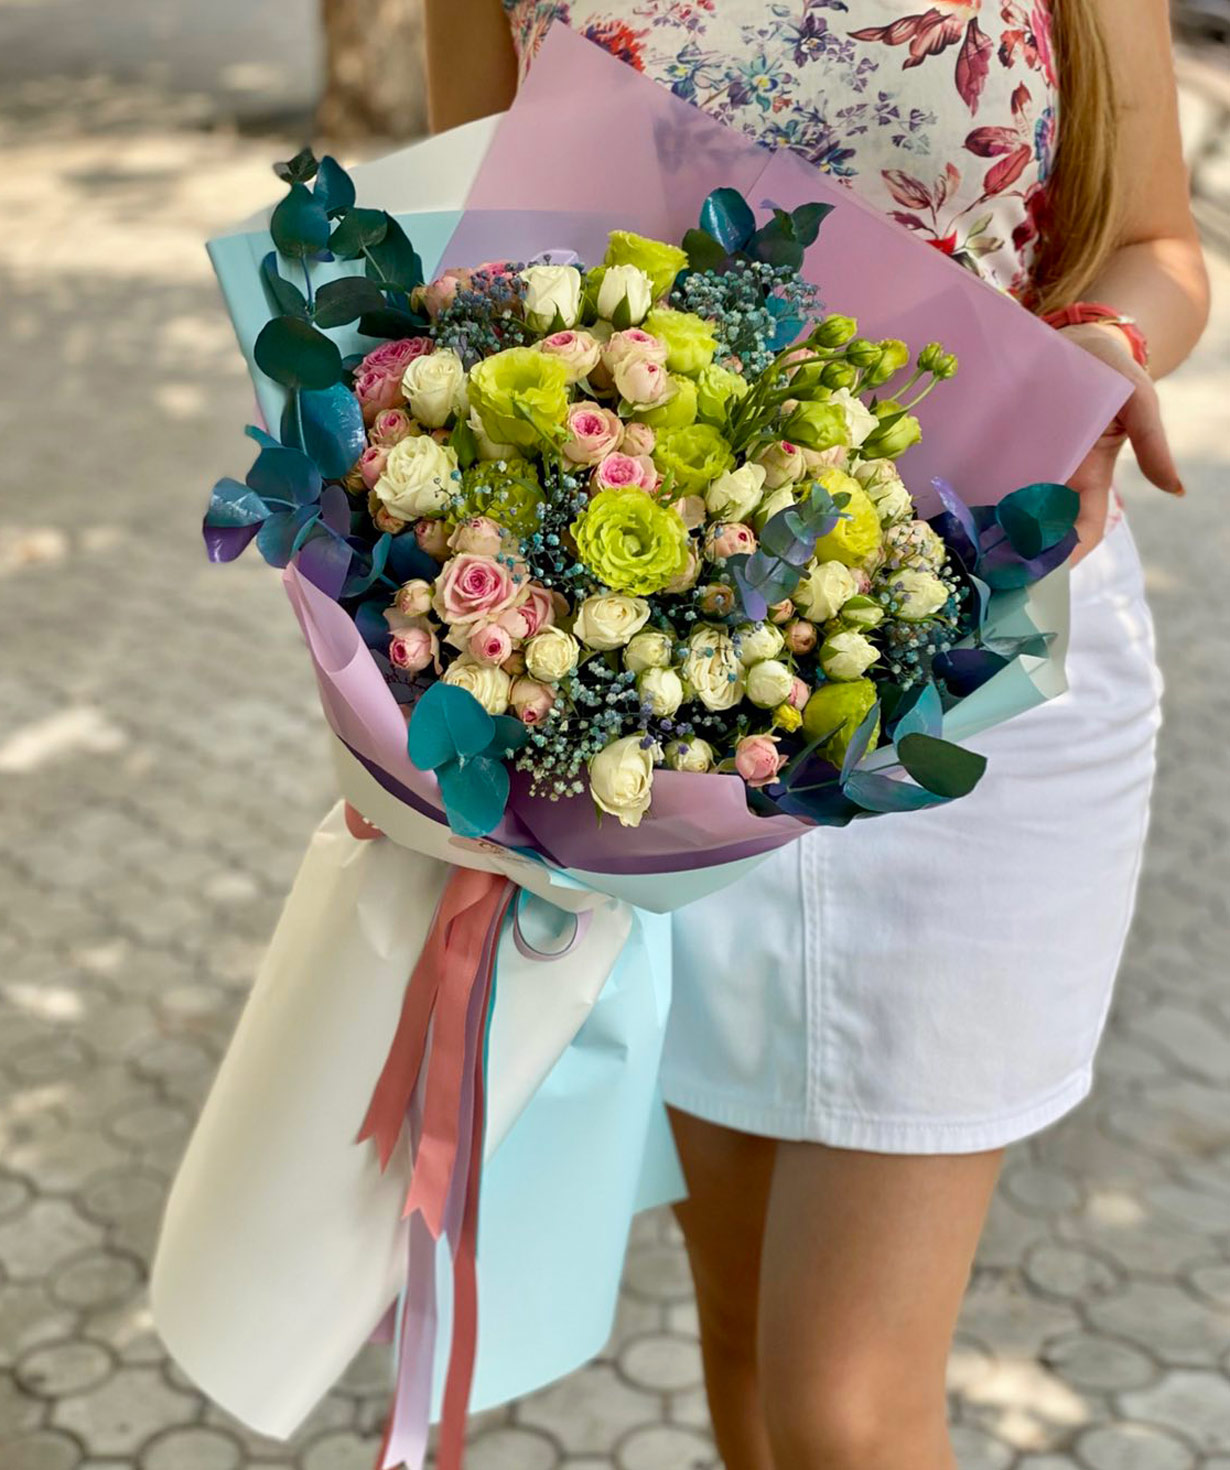 Bouquet `Trezivio` with spray roses and lisianthus